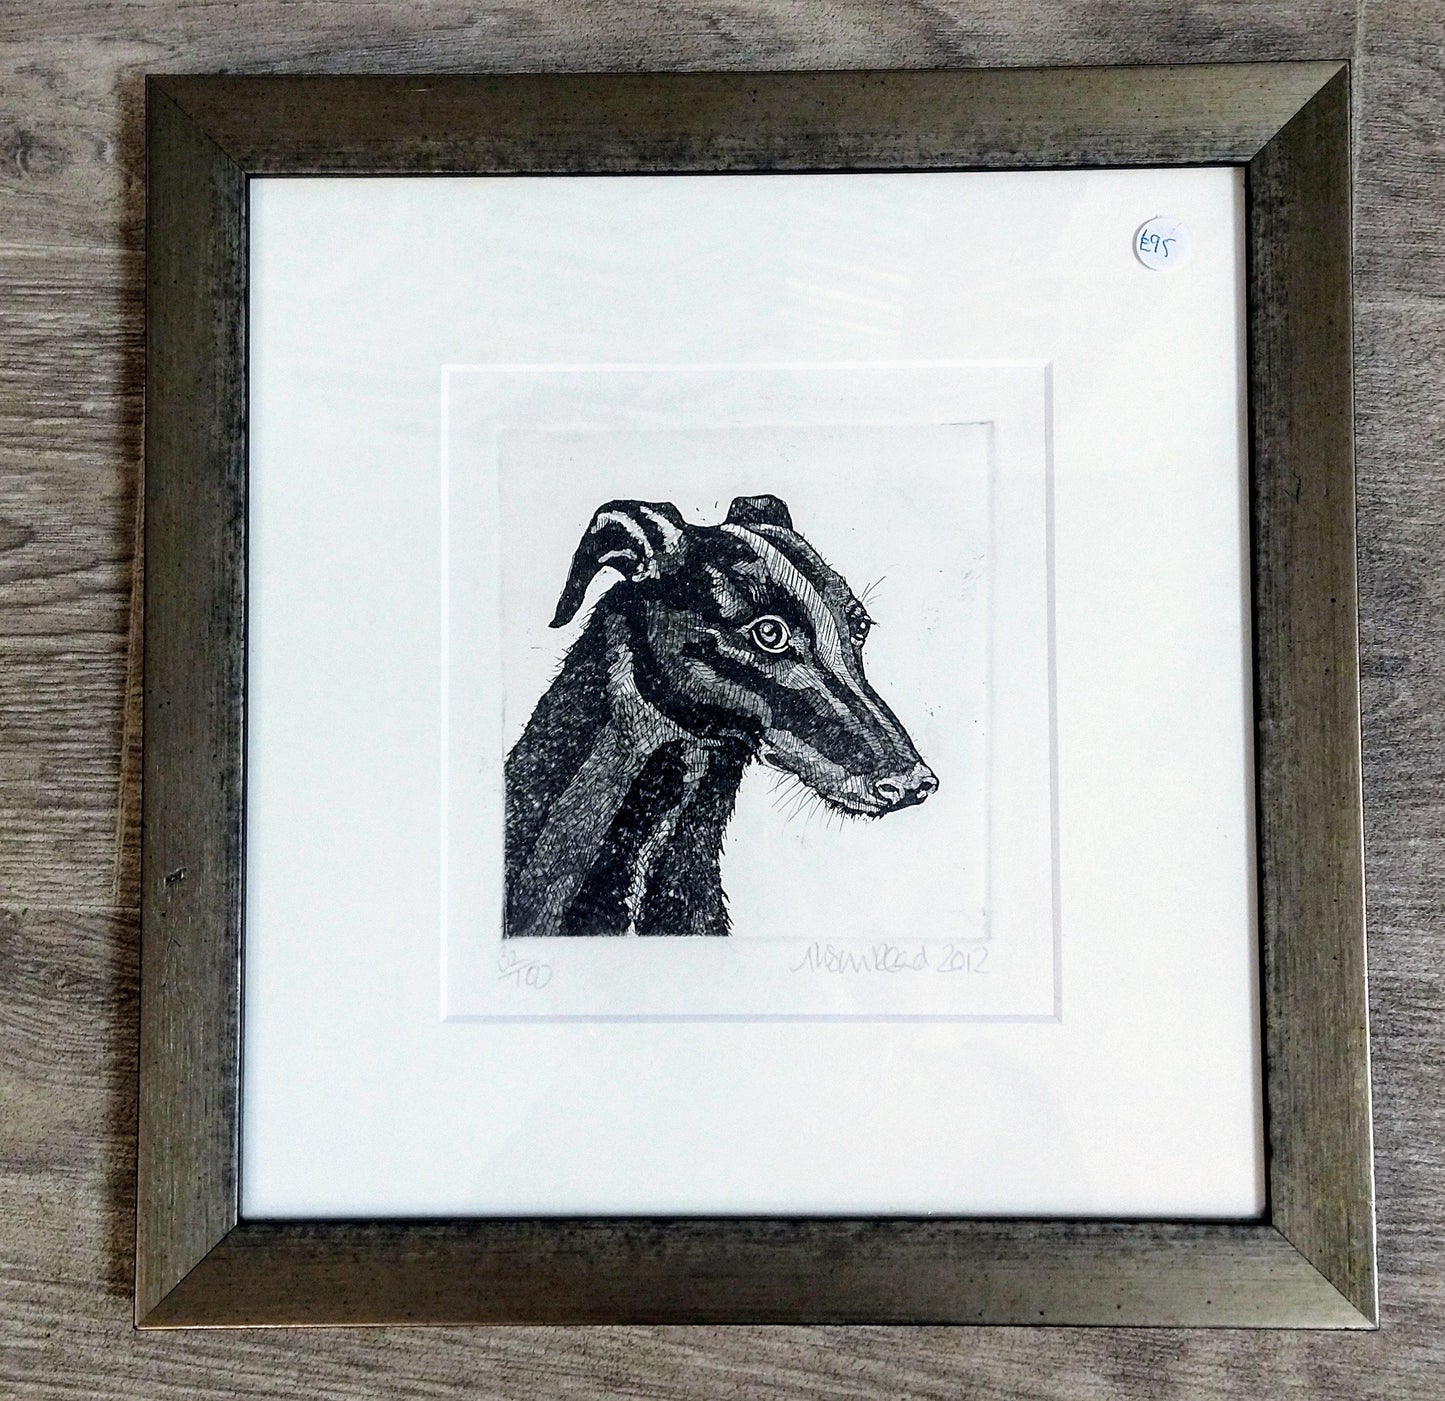 Alison Read -Unnamed Greyhound, Original Etching